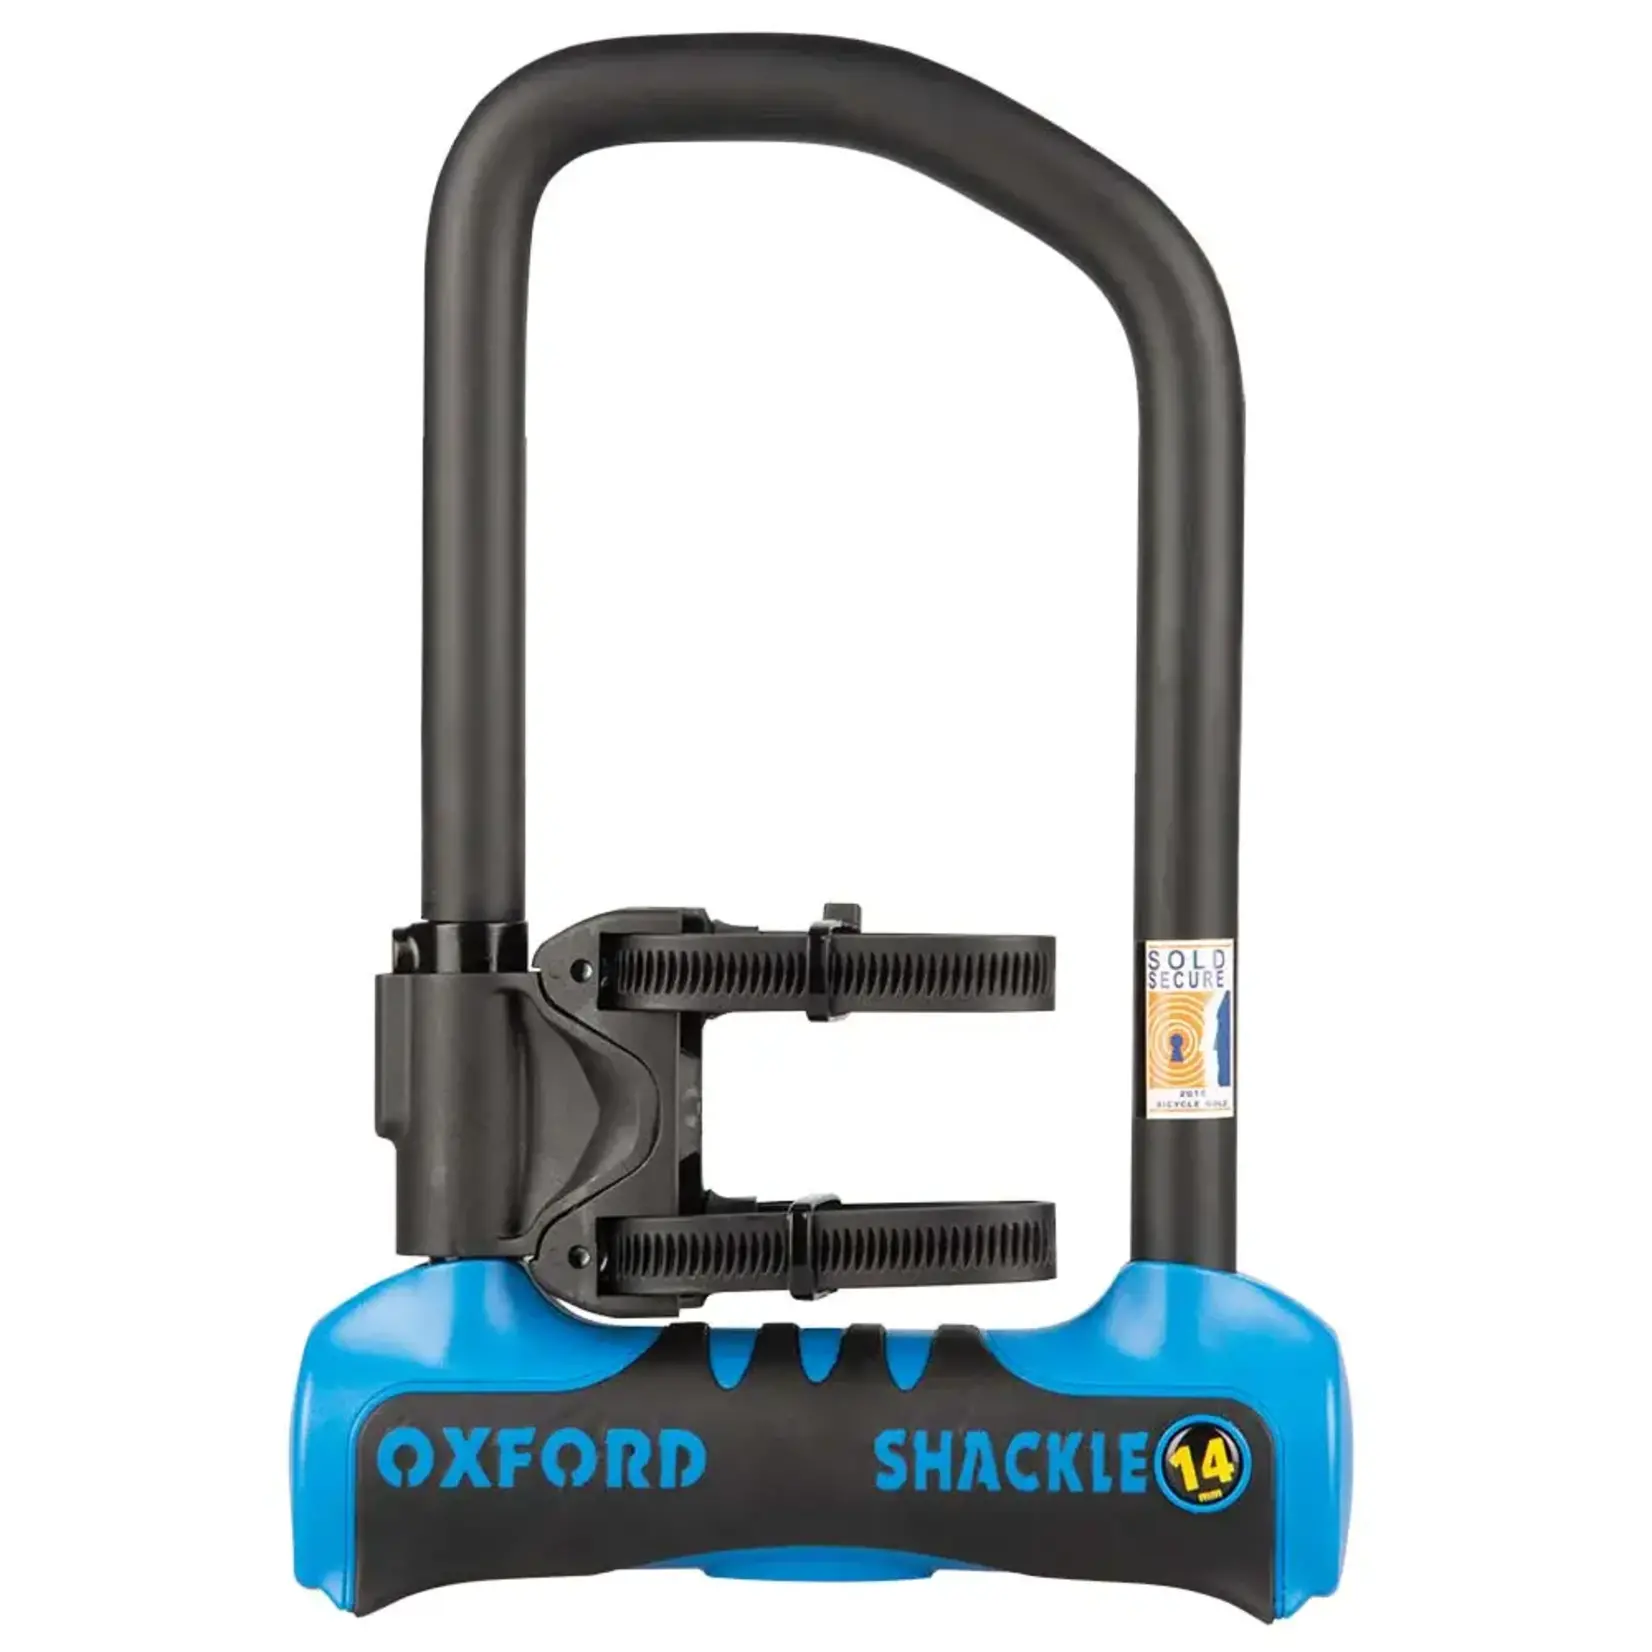 Oxford Oxford Shackle14 Pro U-Lock 260mm x 177mm BLUE